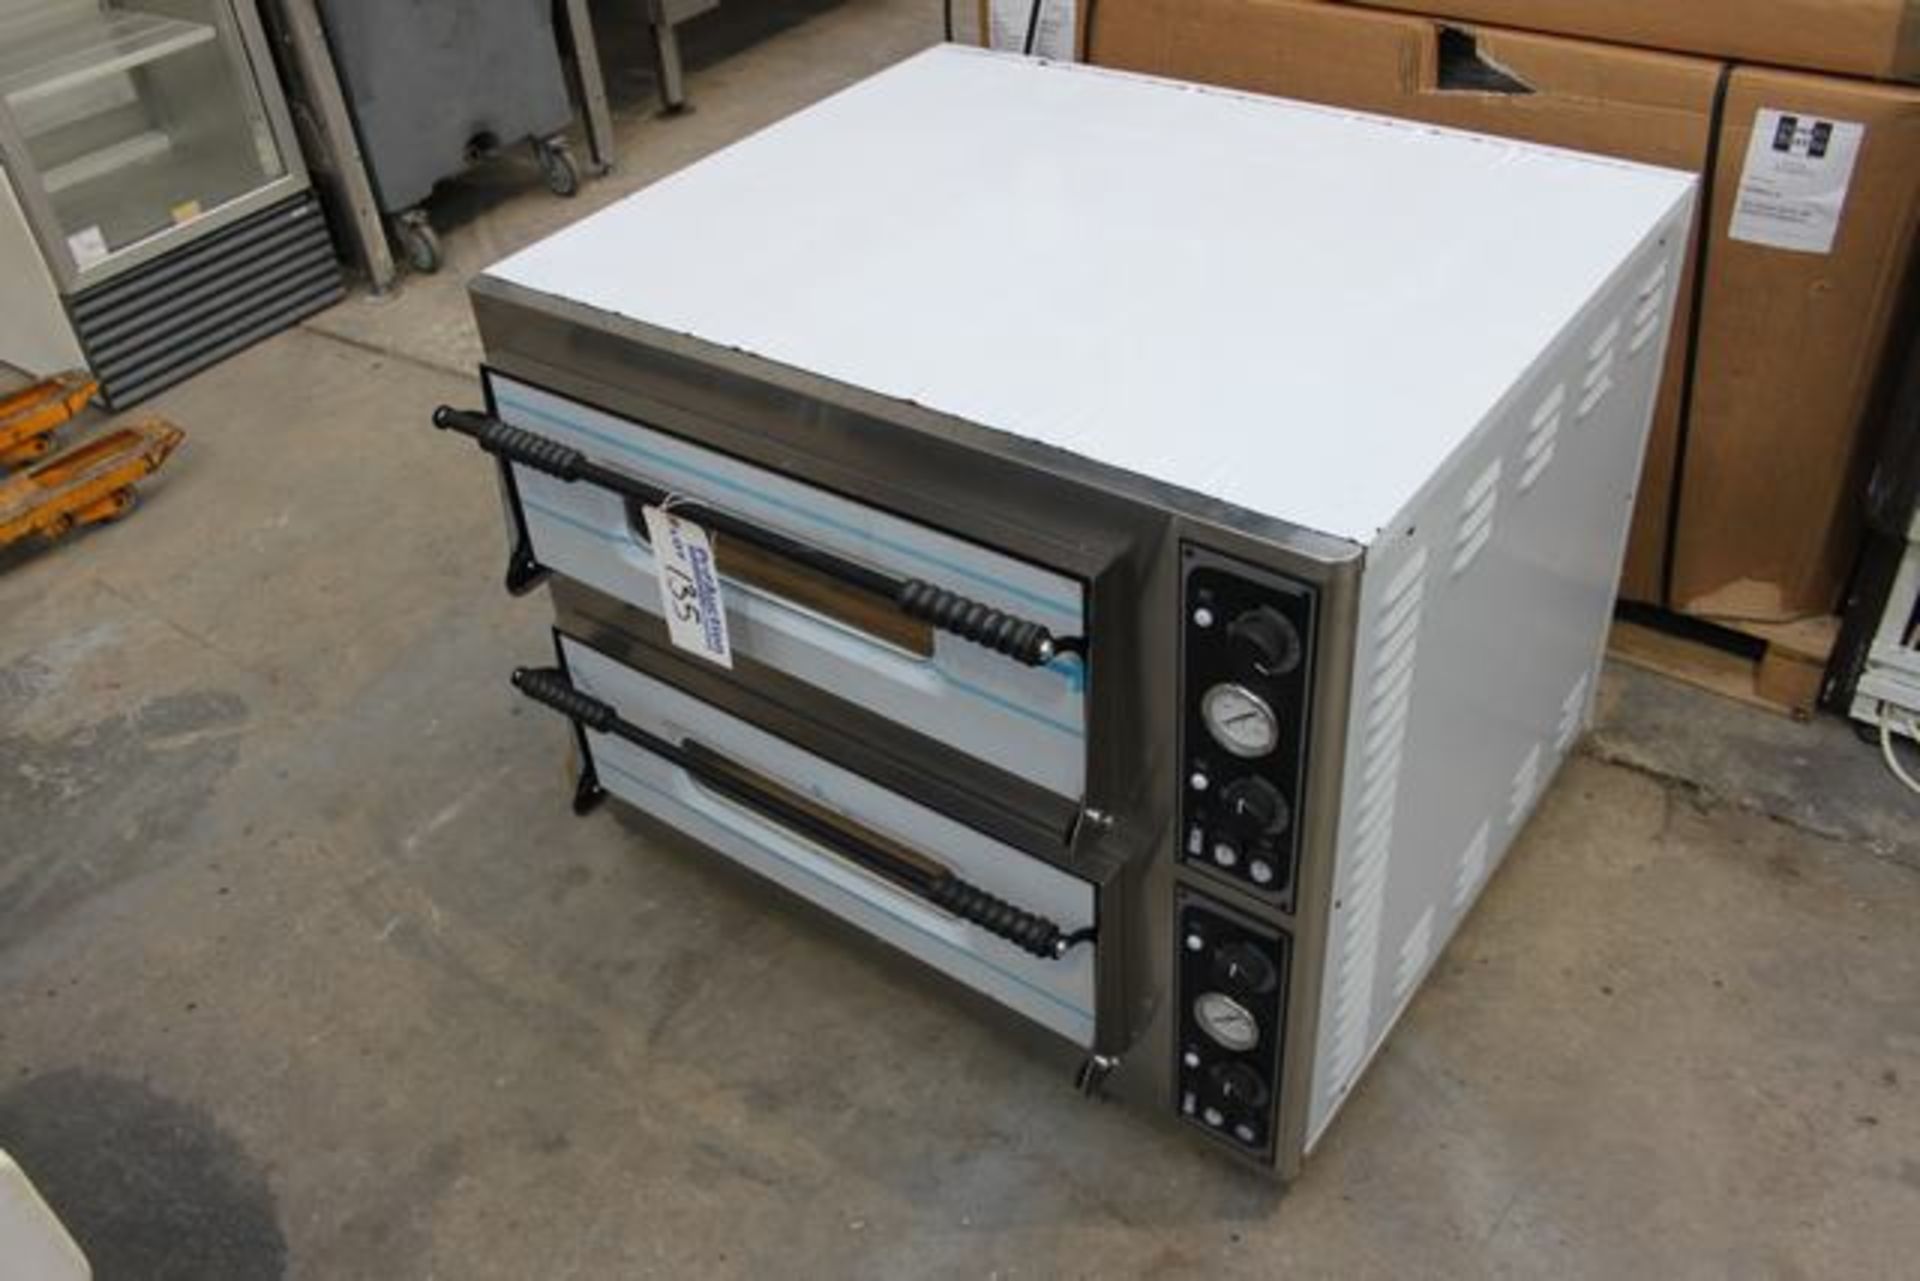 Forni REST066 Big L electric pizza oven